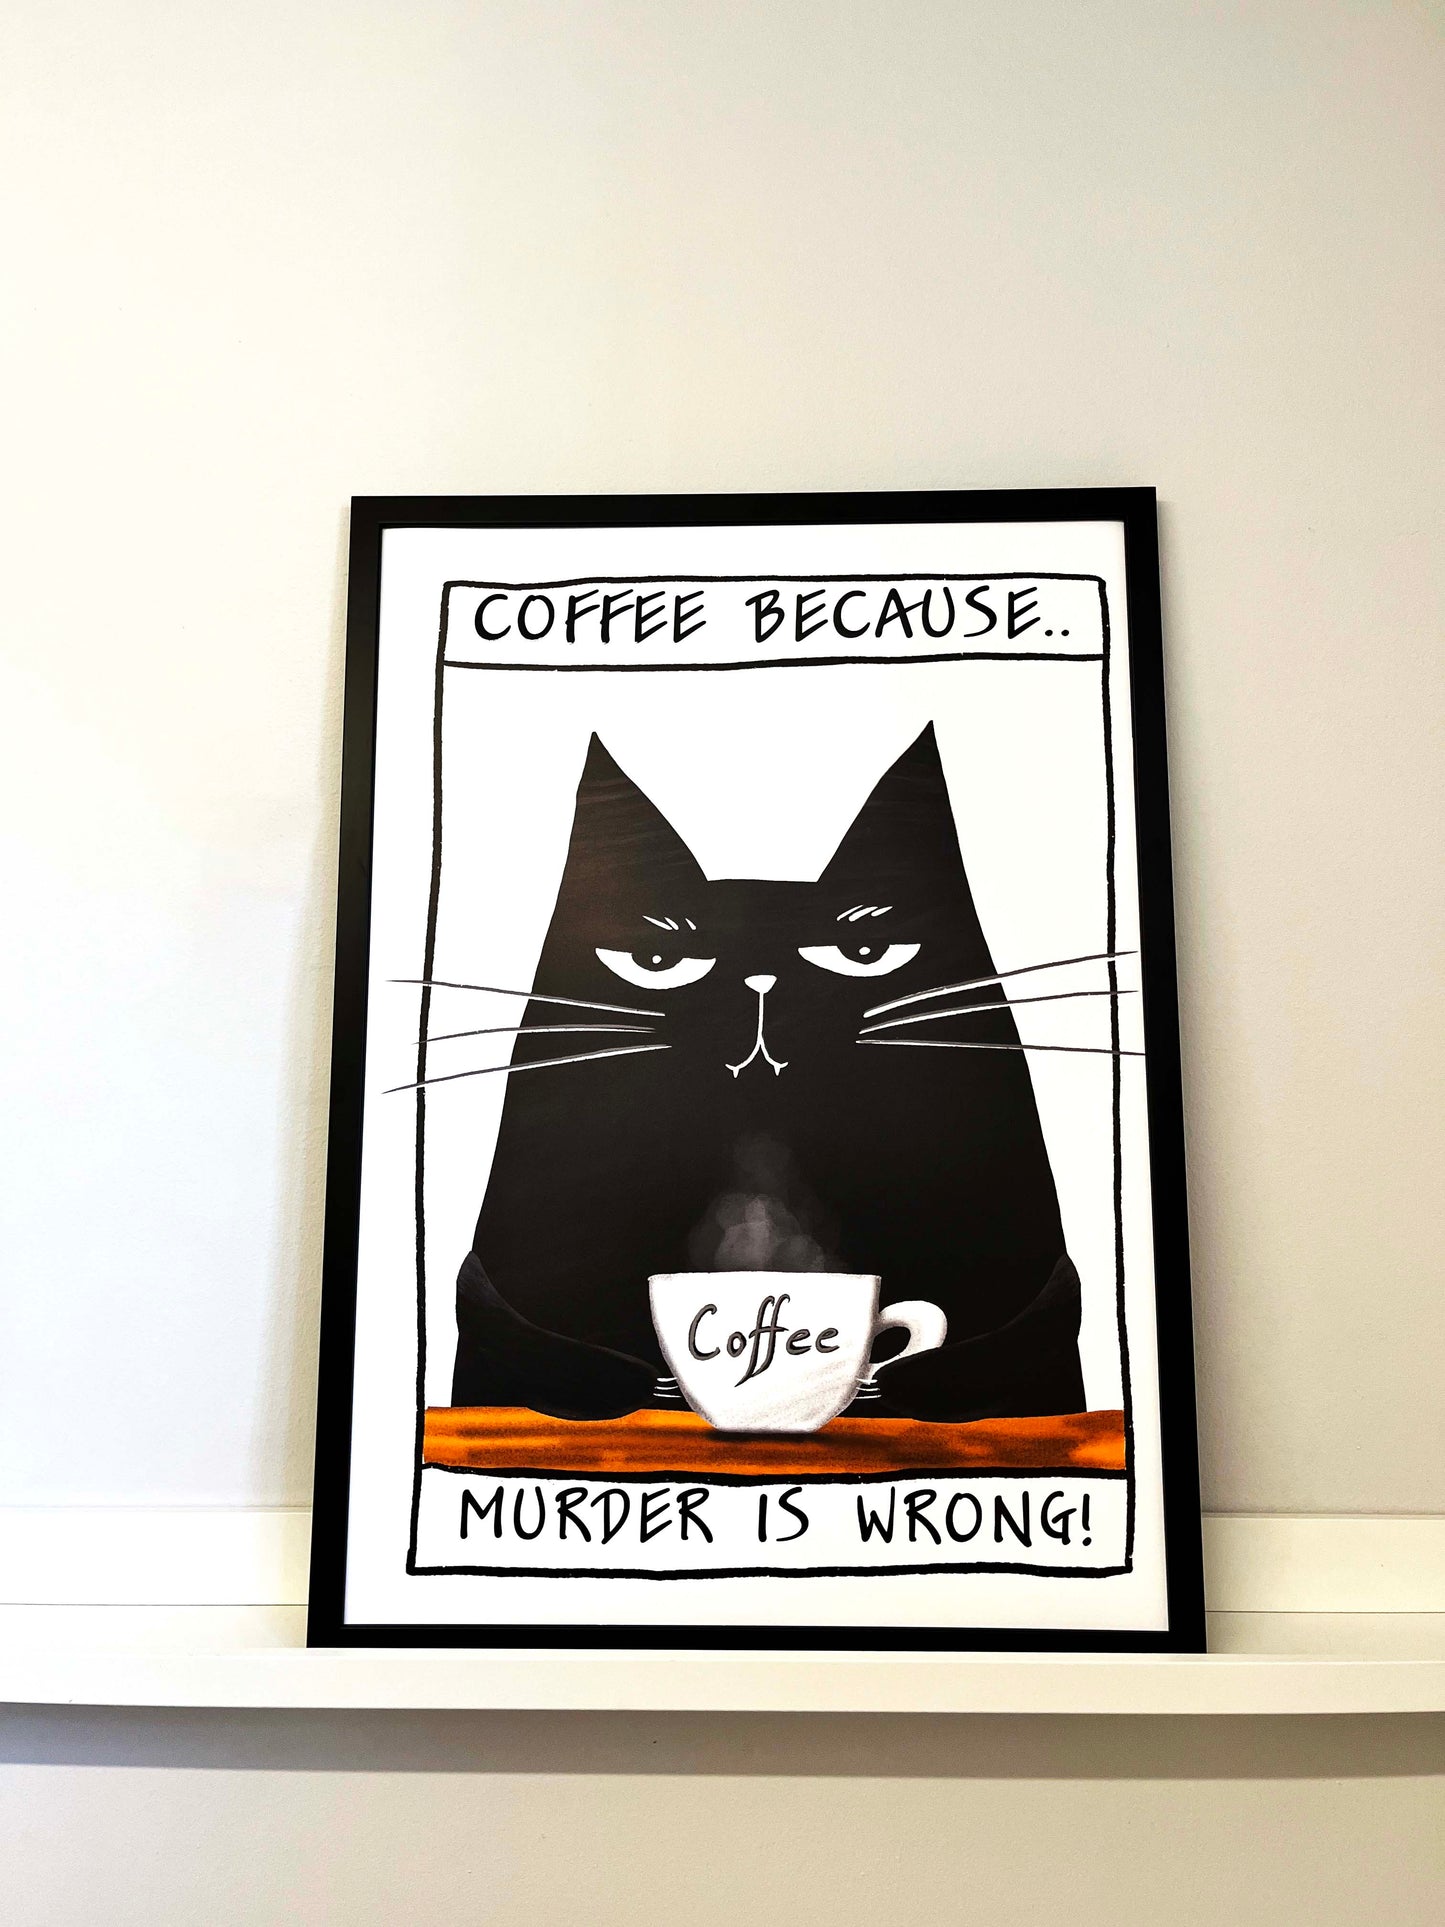 Funny UV varnish poster "Coffee"